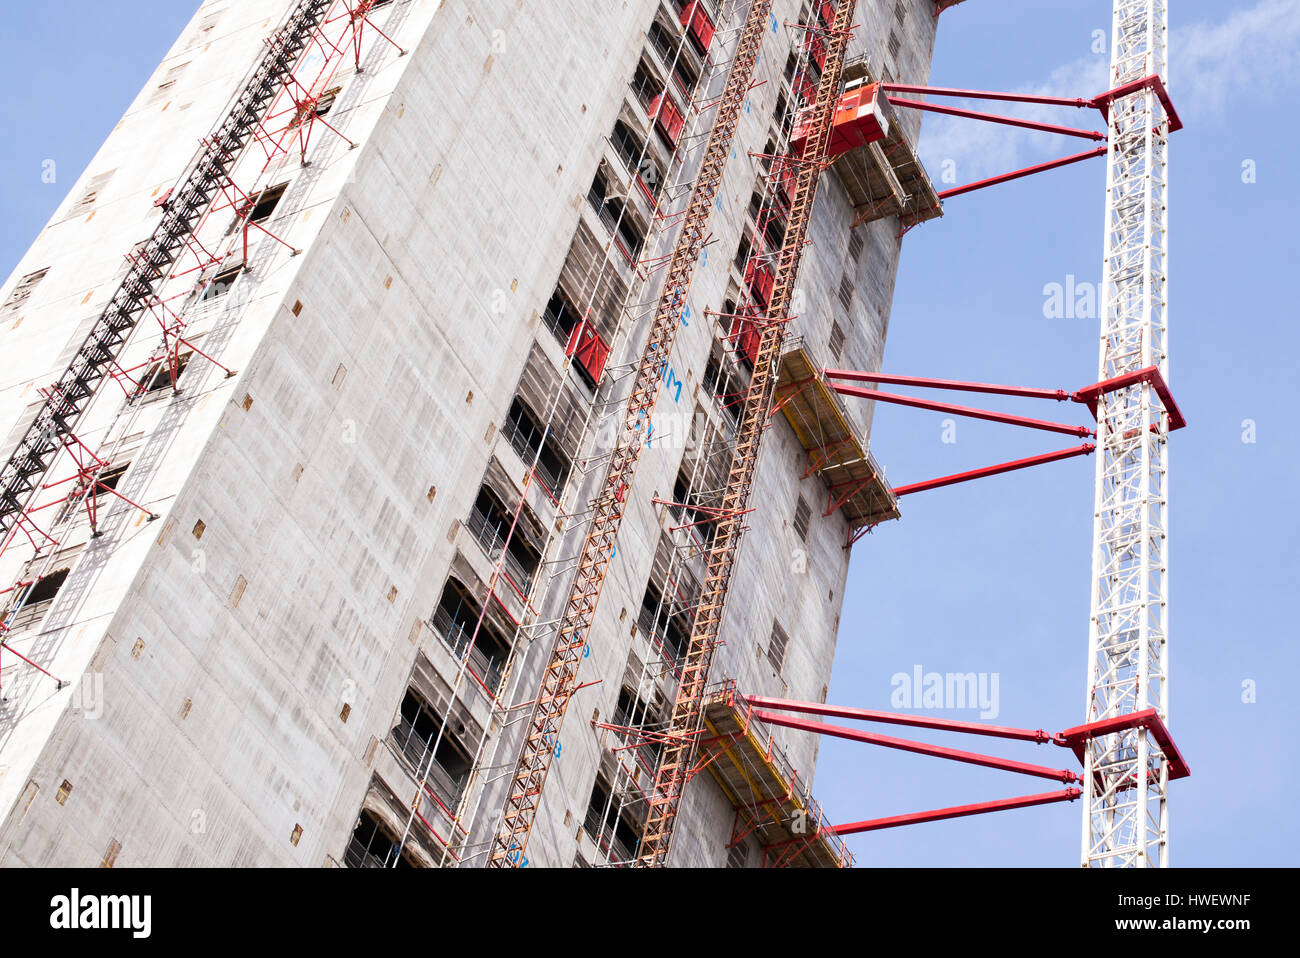 Building Construction. Canary Wharf, London. UK Stock Photo